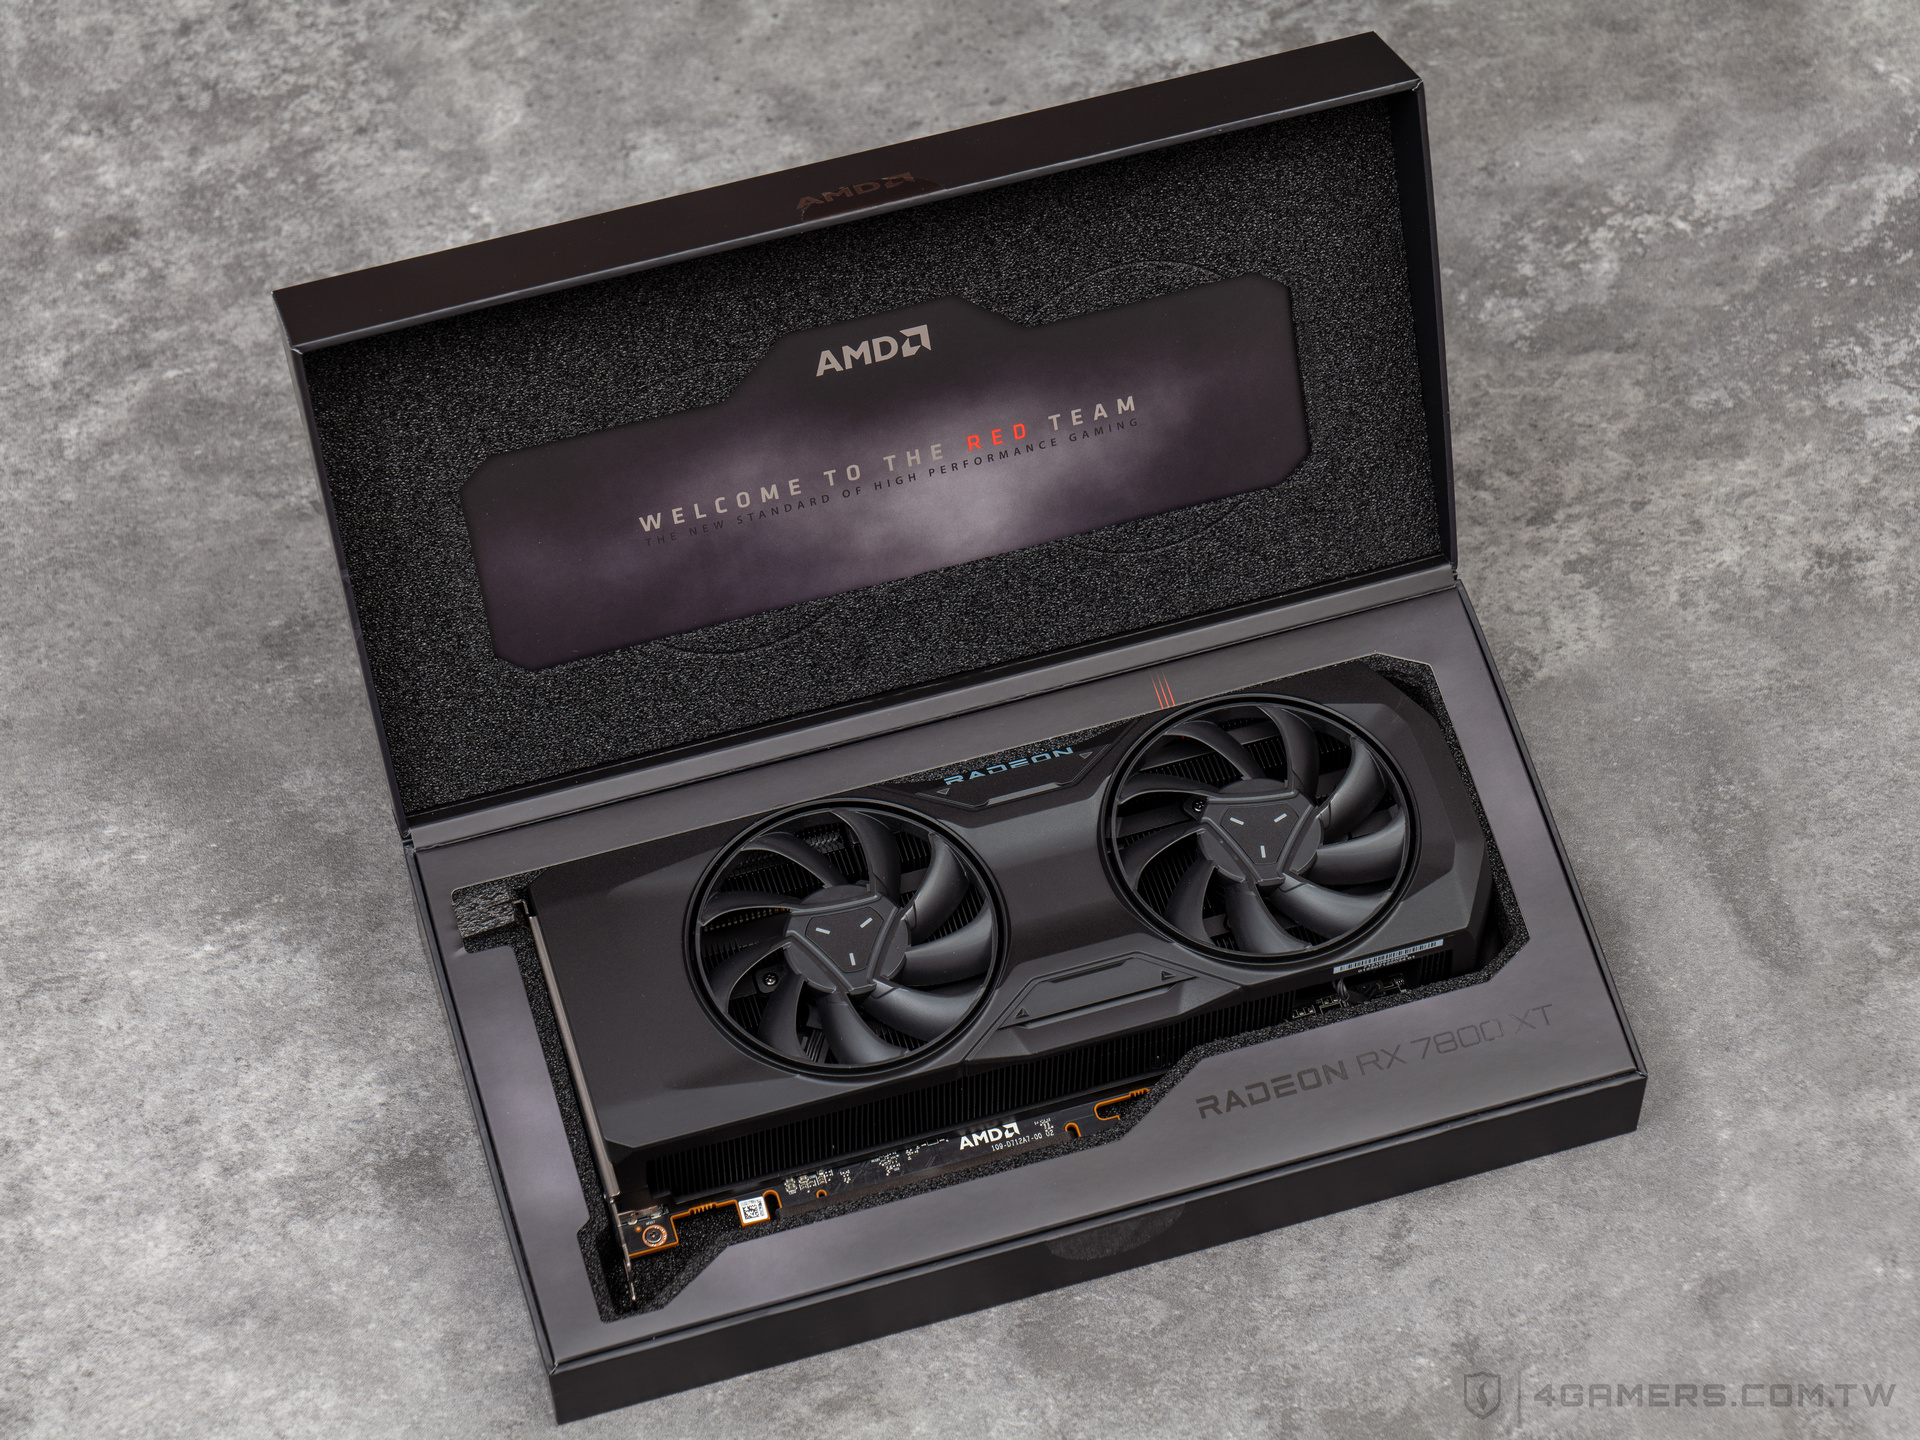 AMD Radeon RX 7800 XT and RX 7700 XT